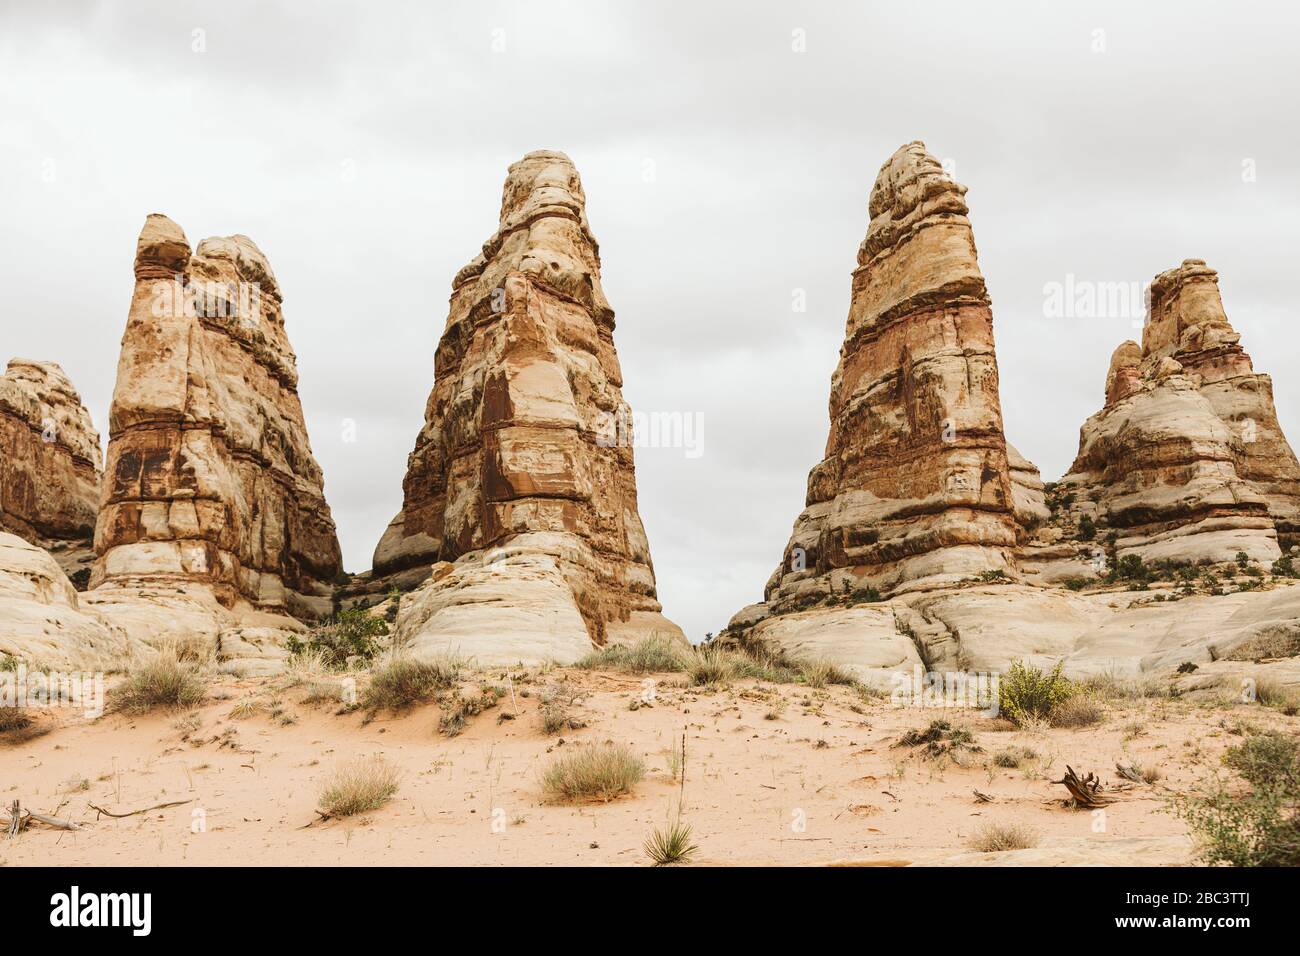 four sandstone towers against gray skies in the desert of utah Stock Photo